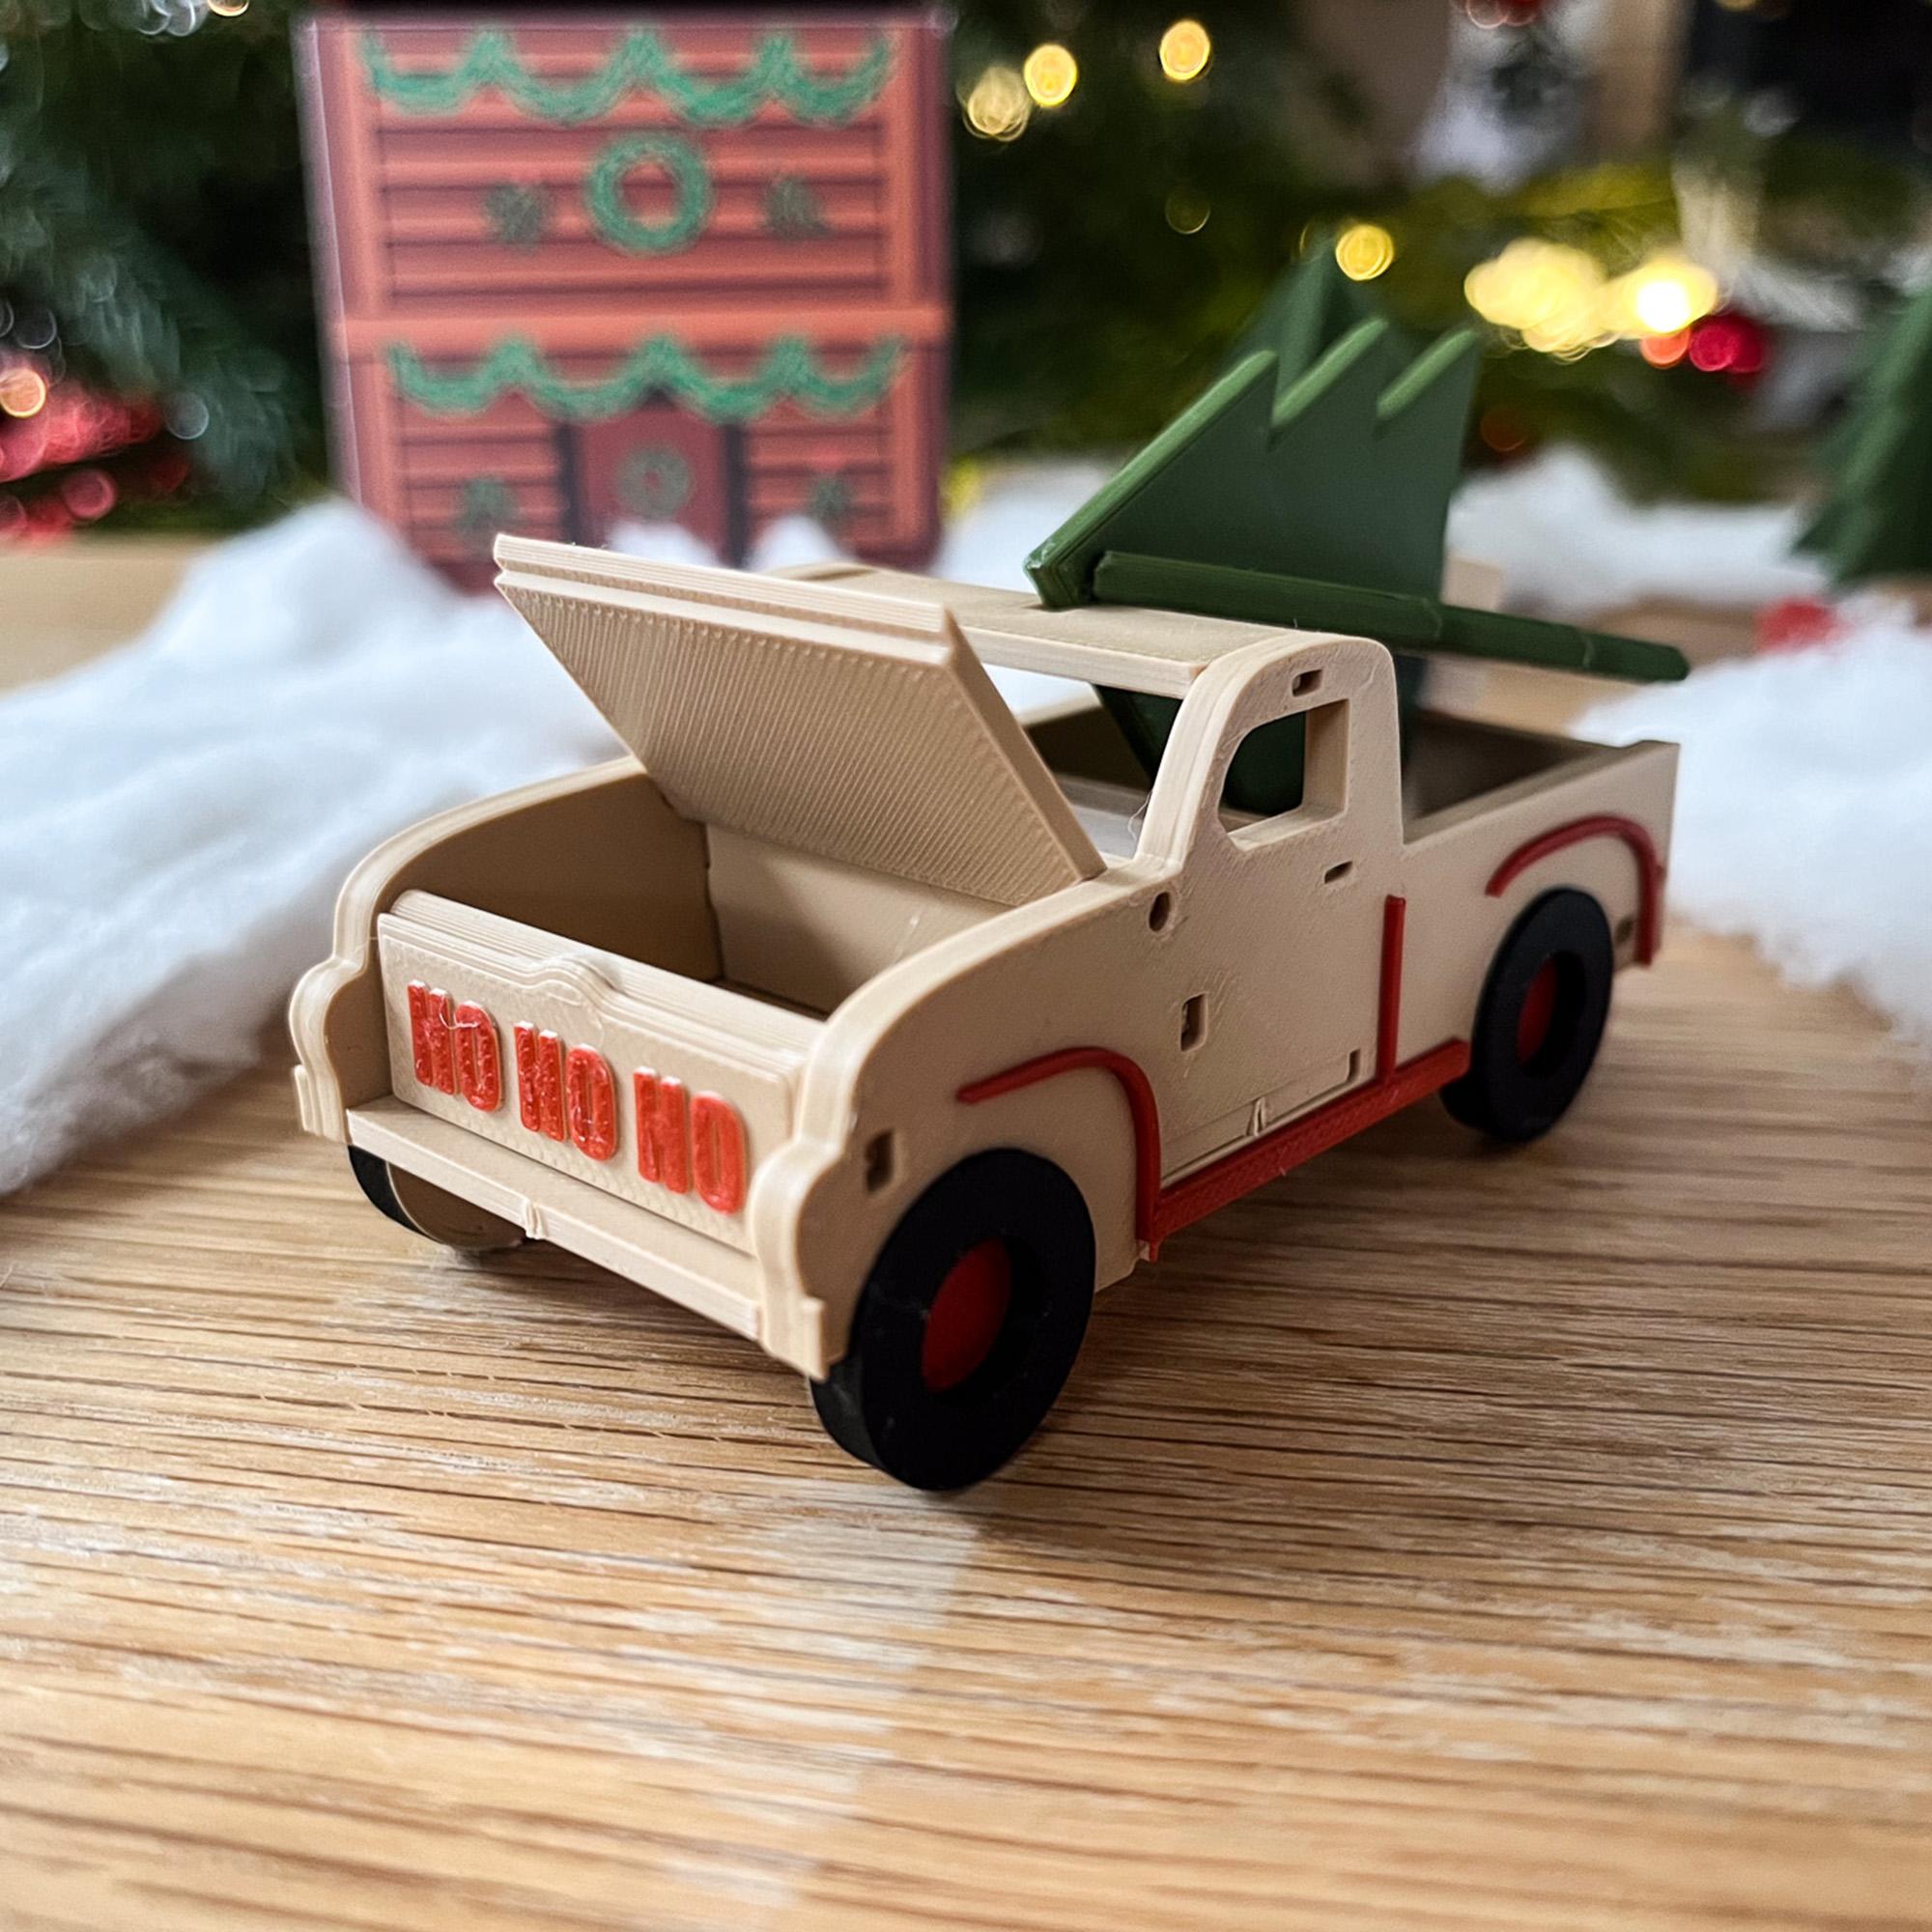 Christmas Truck and Christmas Tree - kit card 3d model